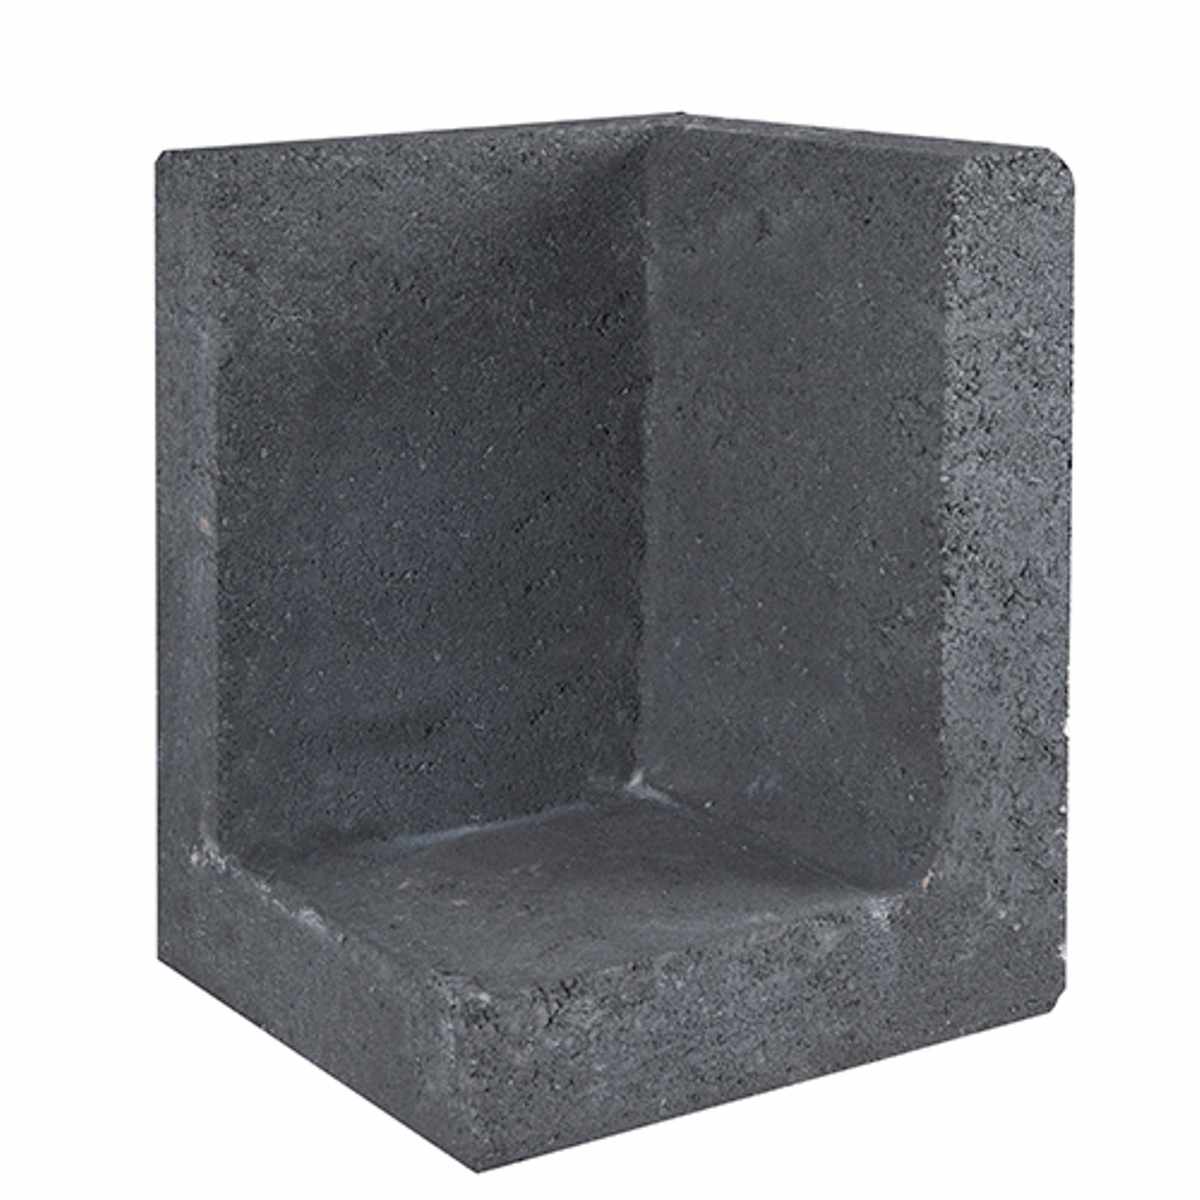 L-element hoek 30x30x40 cm zwart